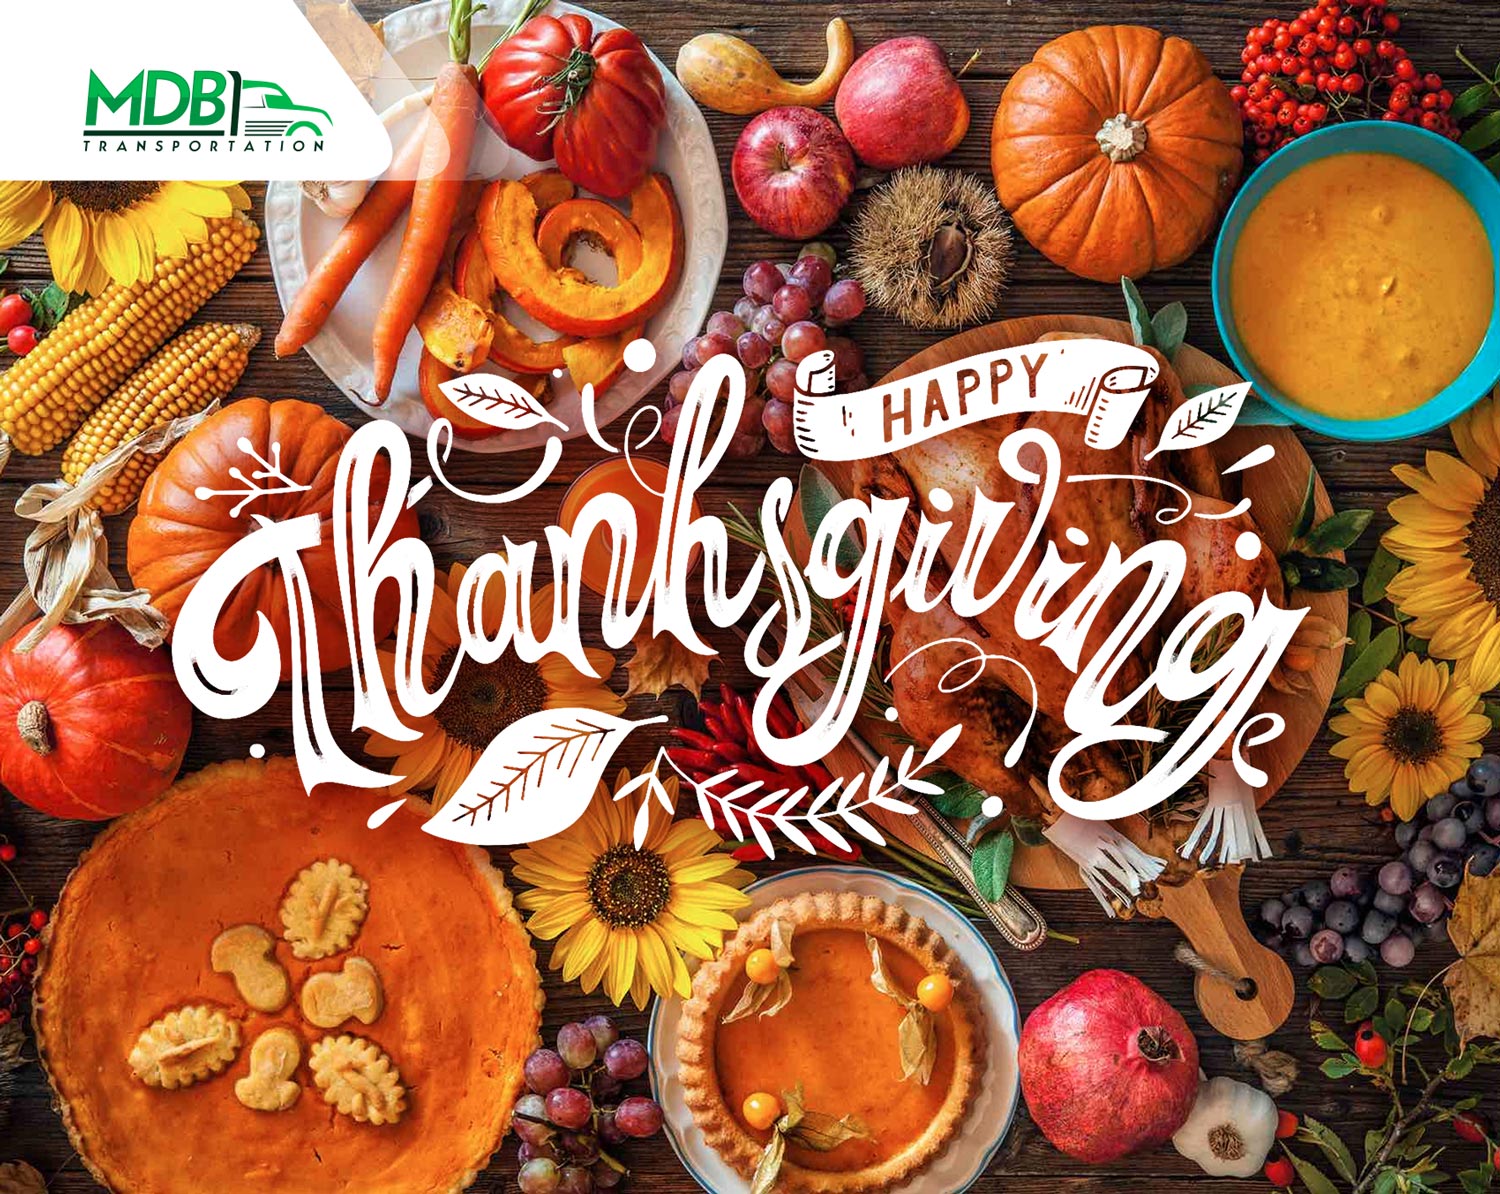 MDB Transportation is Beyond Grateful: Happy Thanksgiving!